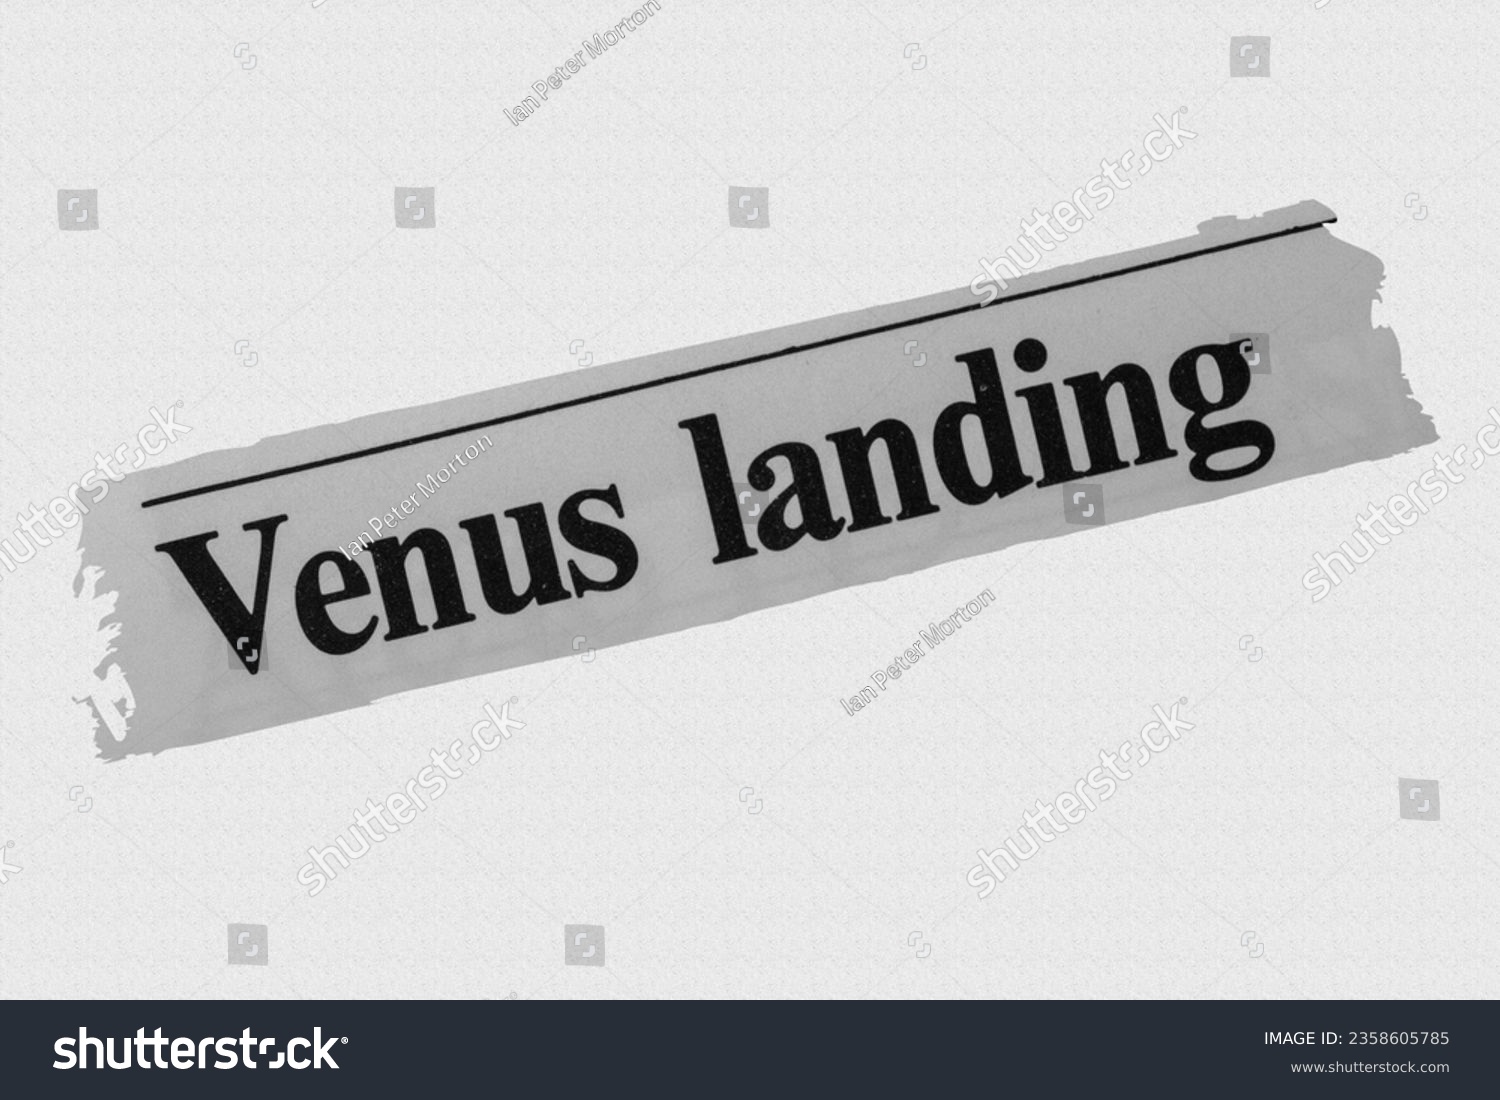 Venus landing - news story from 1975 UK newspaper headline article title #2358605785